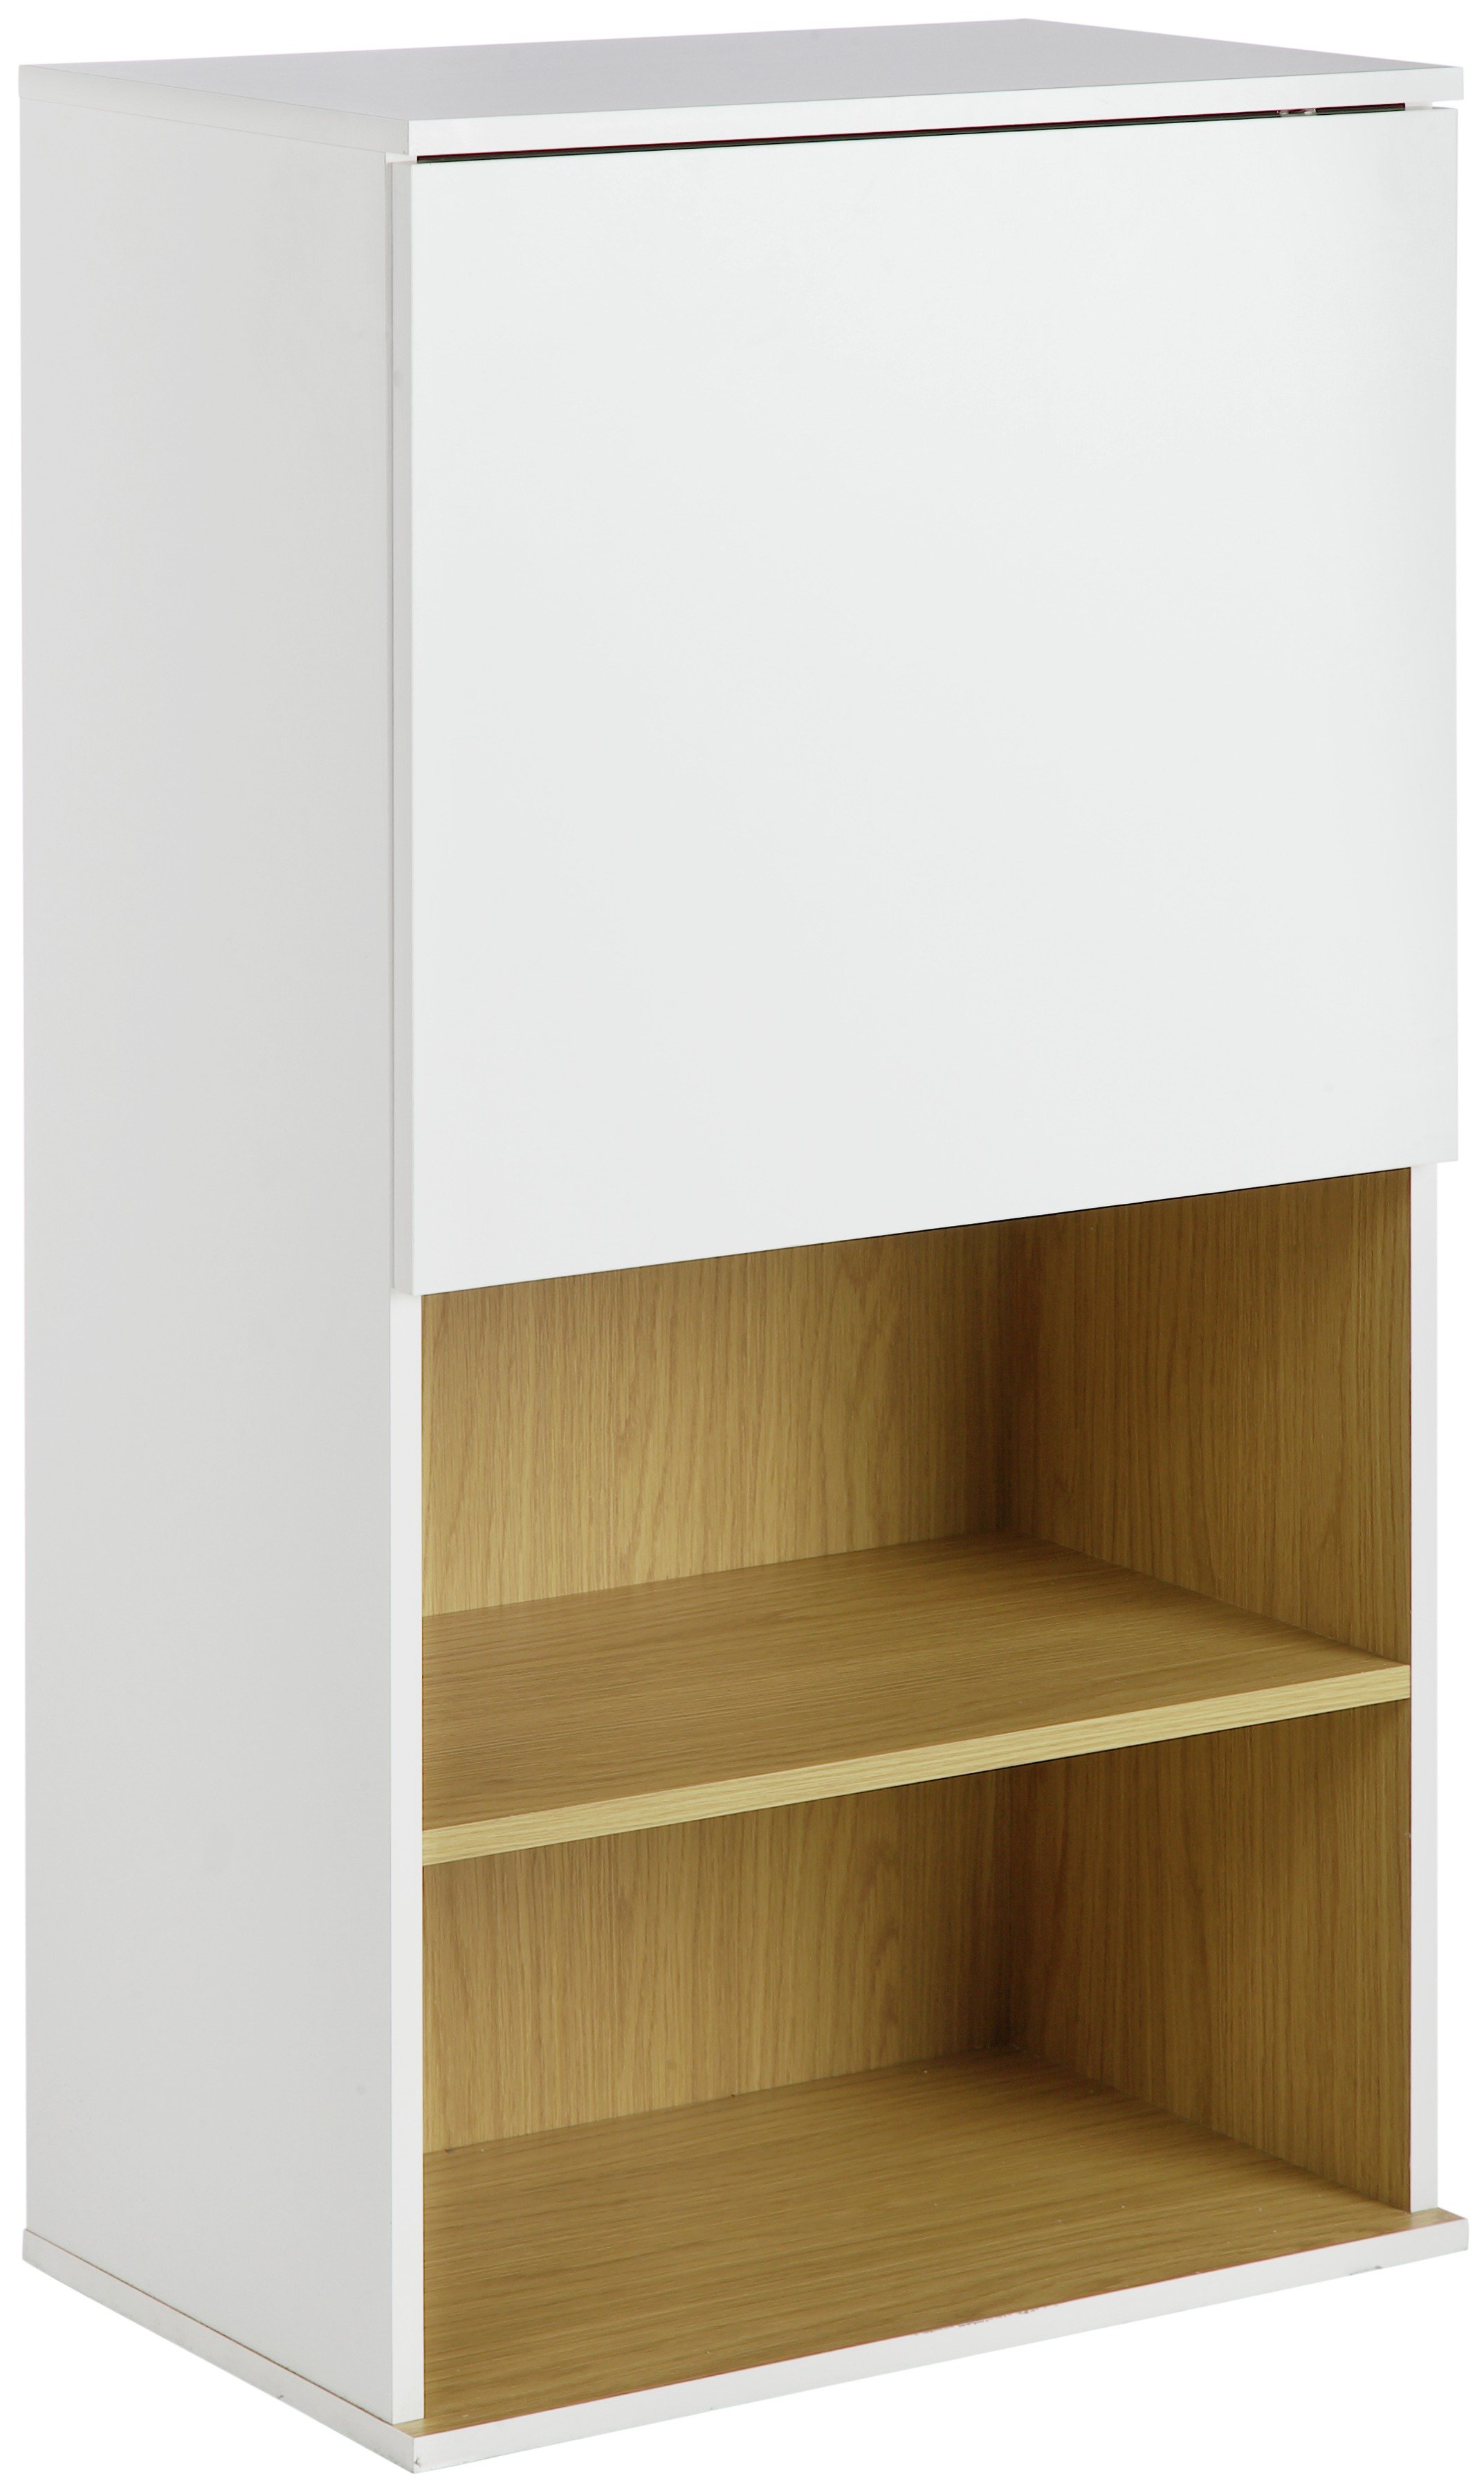 Argos Home Modular Single Door Oak Wall Cabinet - White